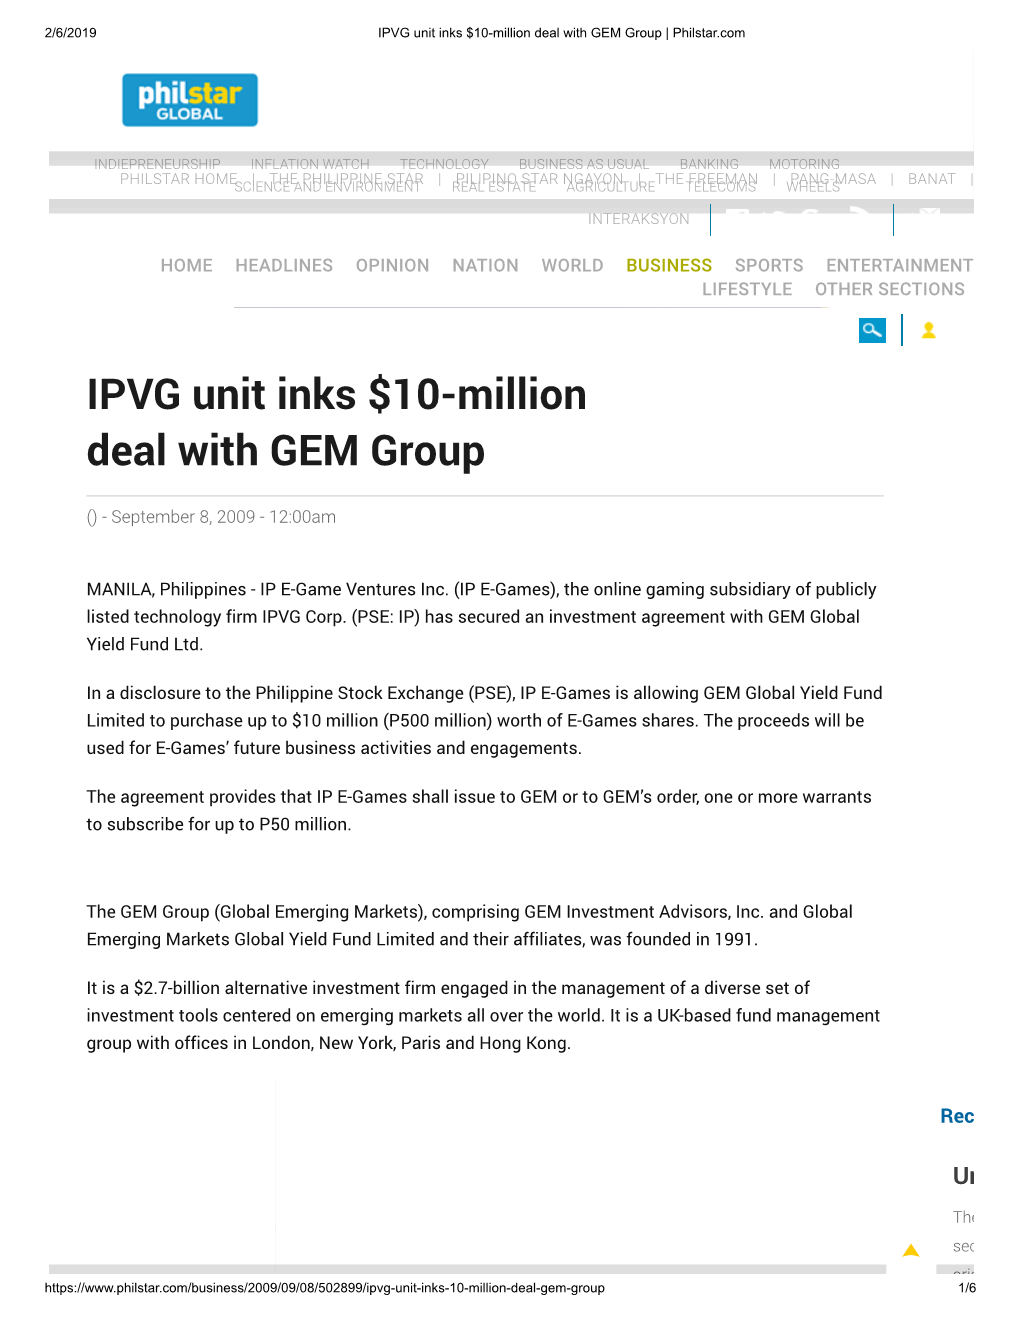 IPVG Unit Inks $10-Million Deal with GEM Group | Philstar.Com